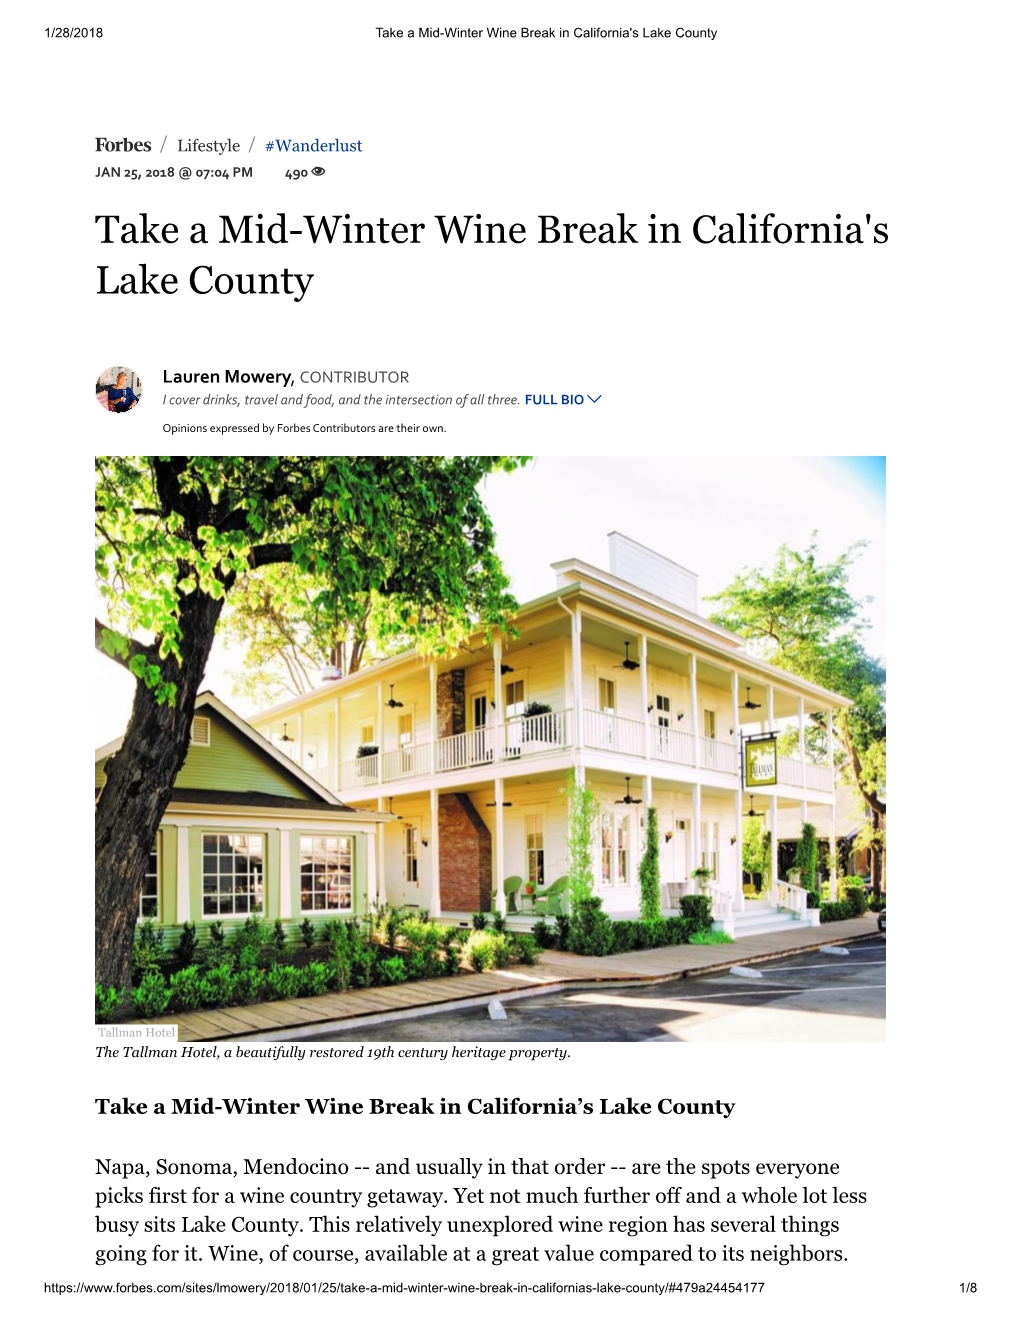 Take a Mid-Winter Wine Break in California's Lake County